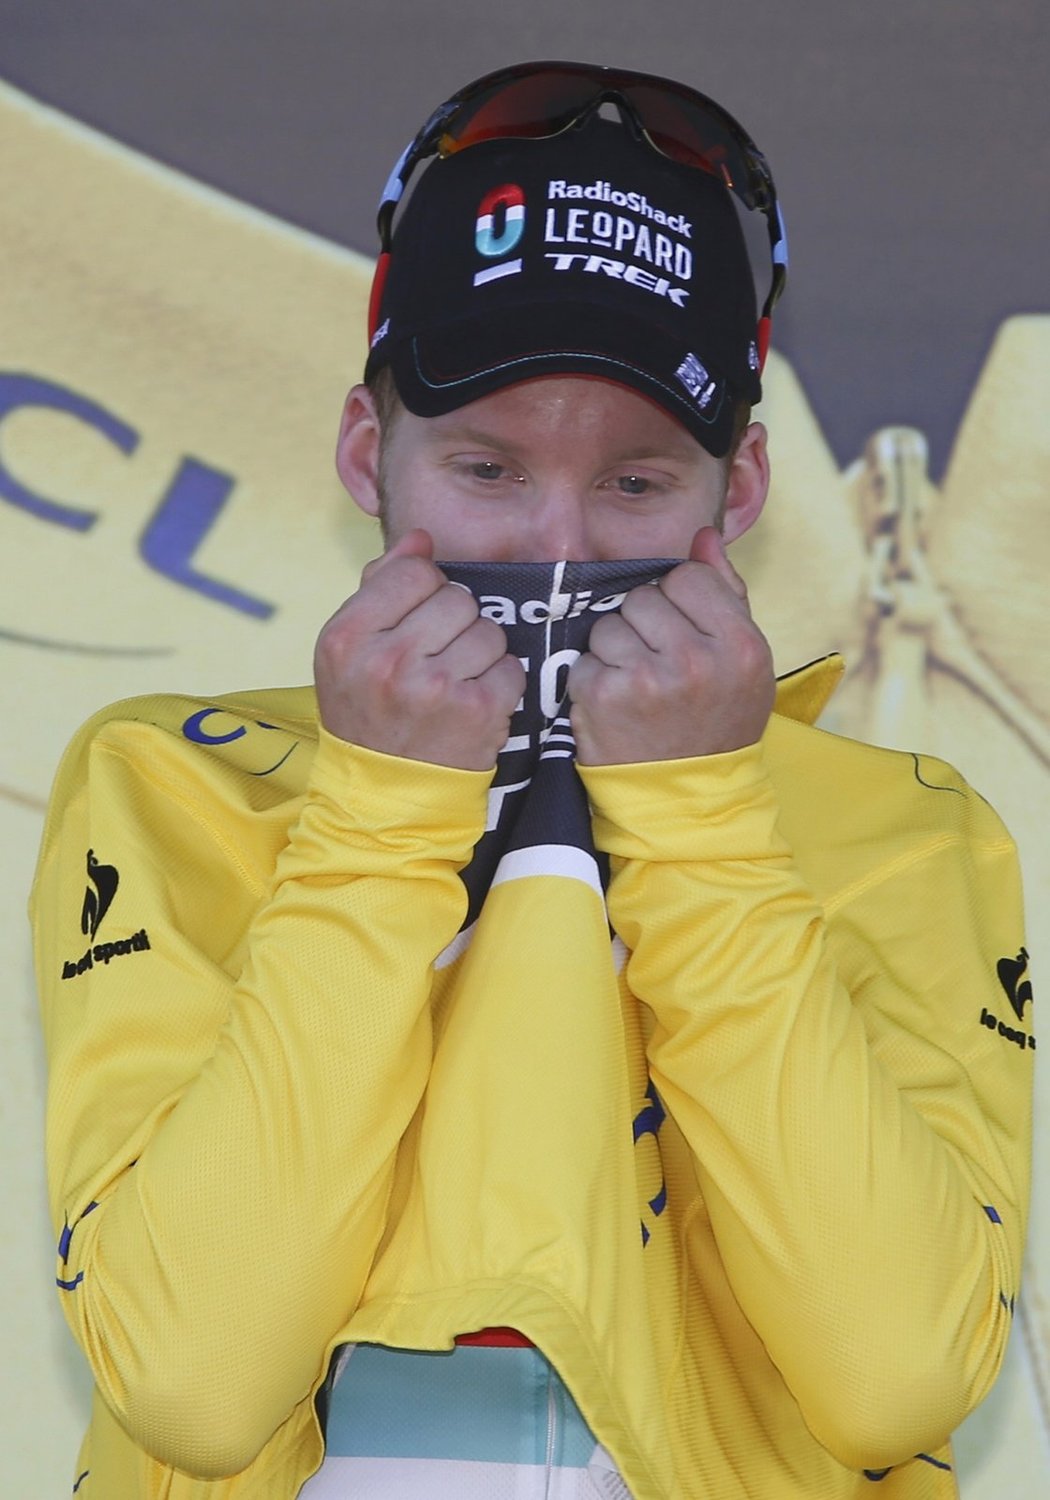 Belgický cyklista Jan Bakelants oz týmu Radioshack Leopard vyhrál druhou etapu letošní Tour de France